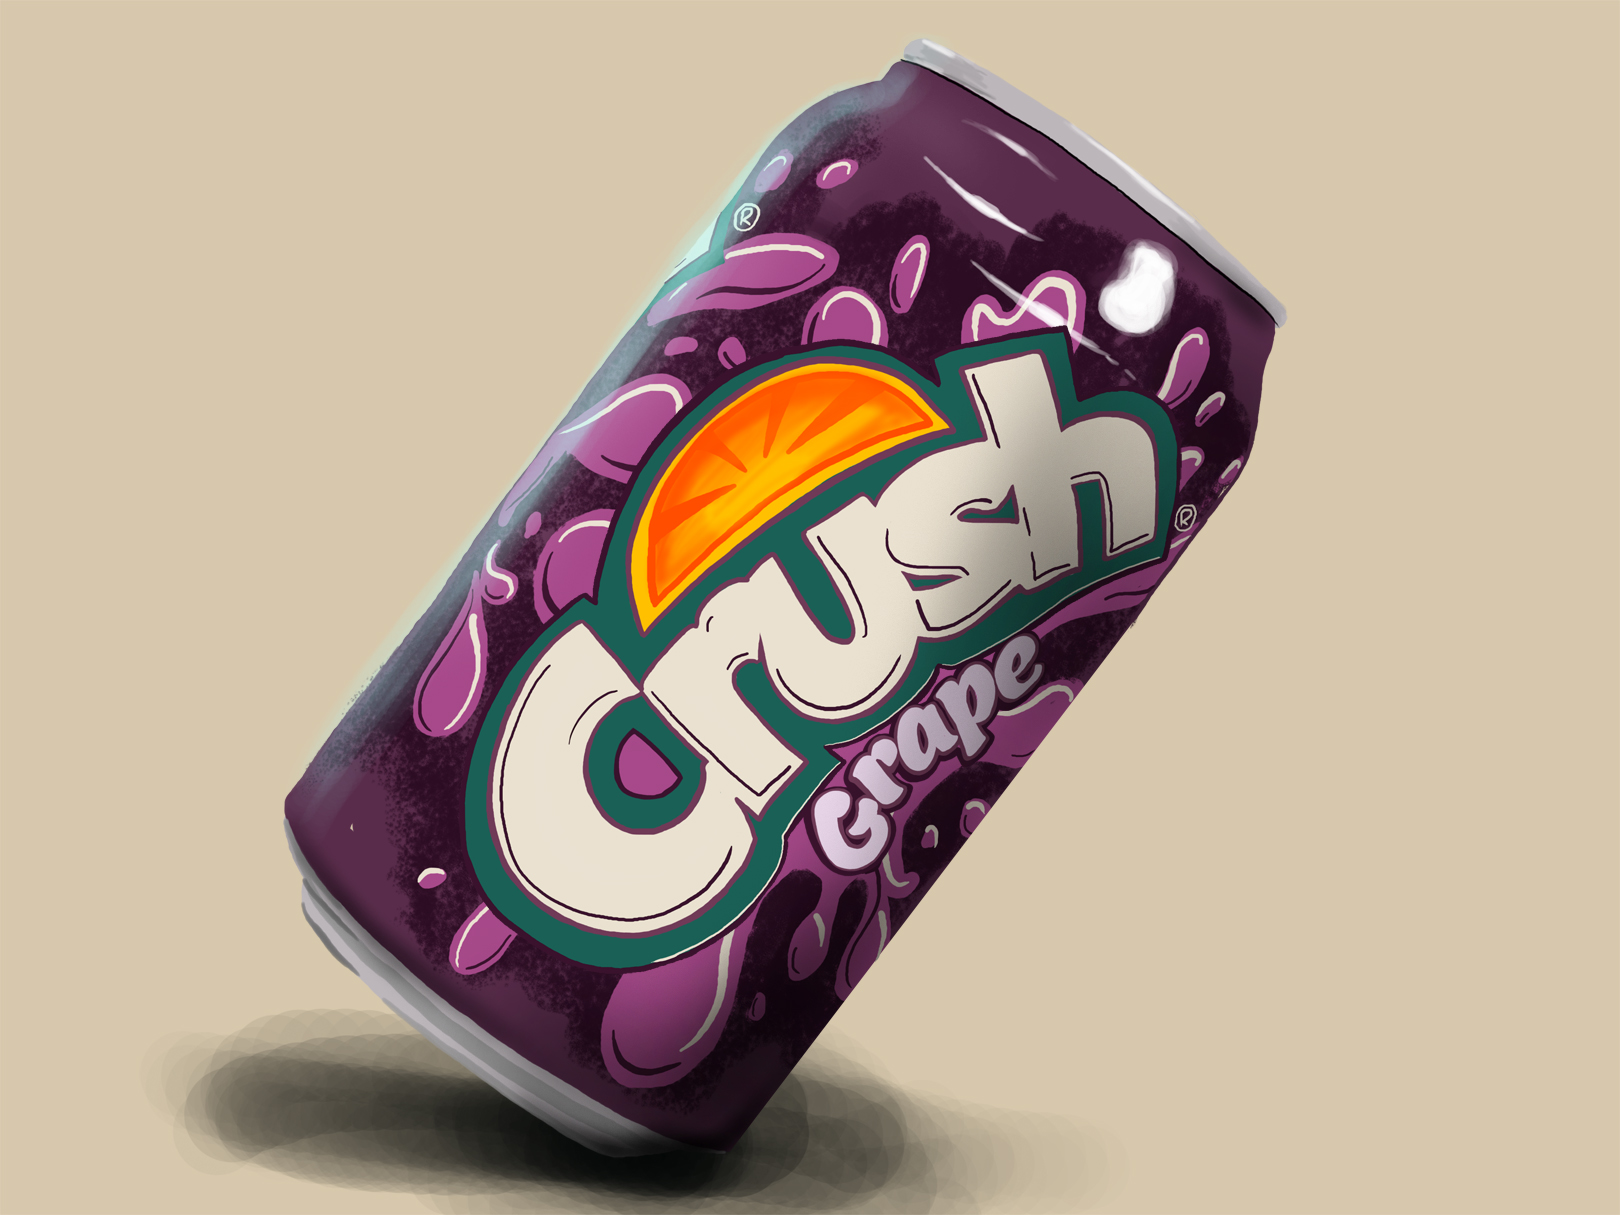 Crush soda copy